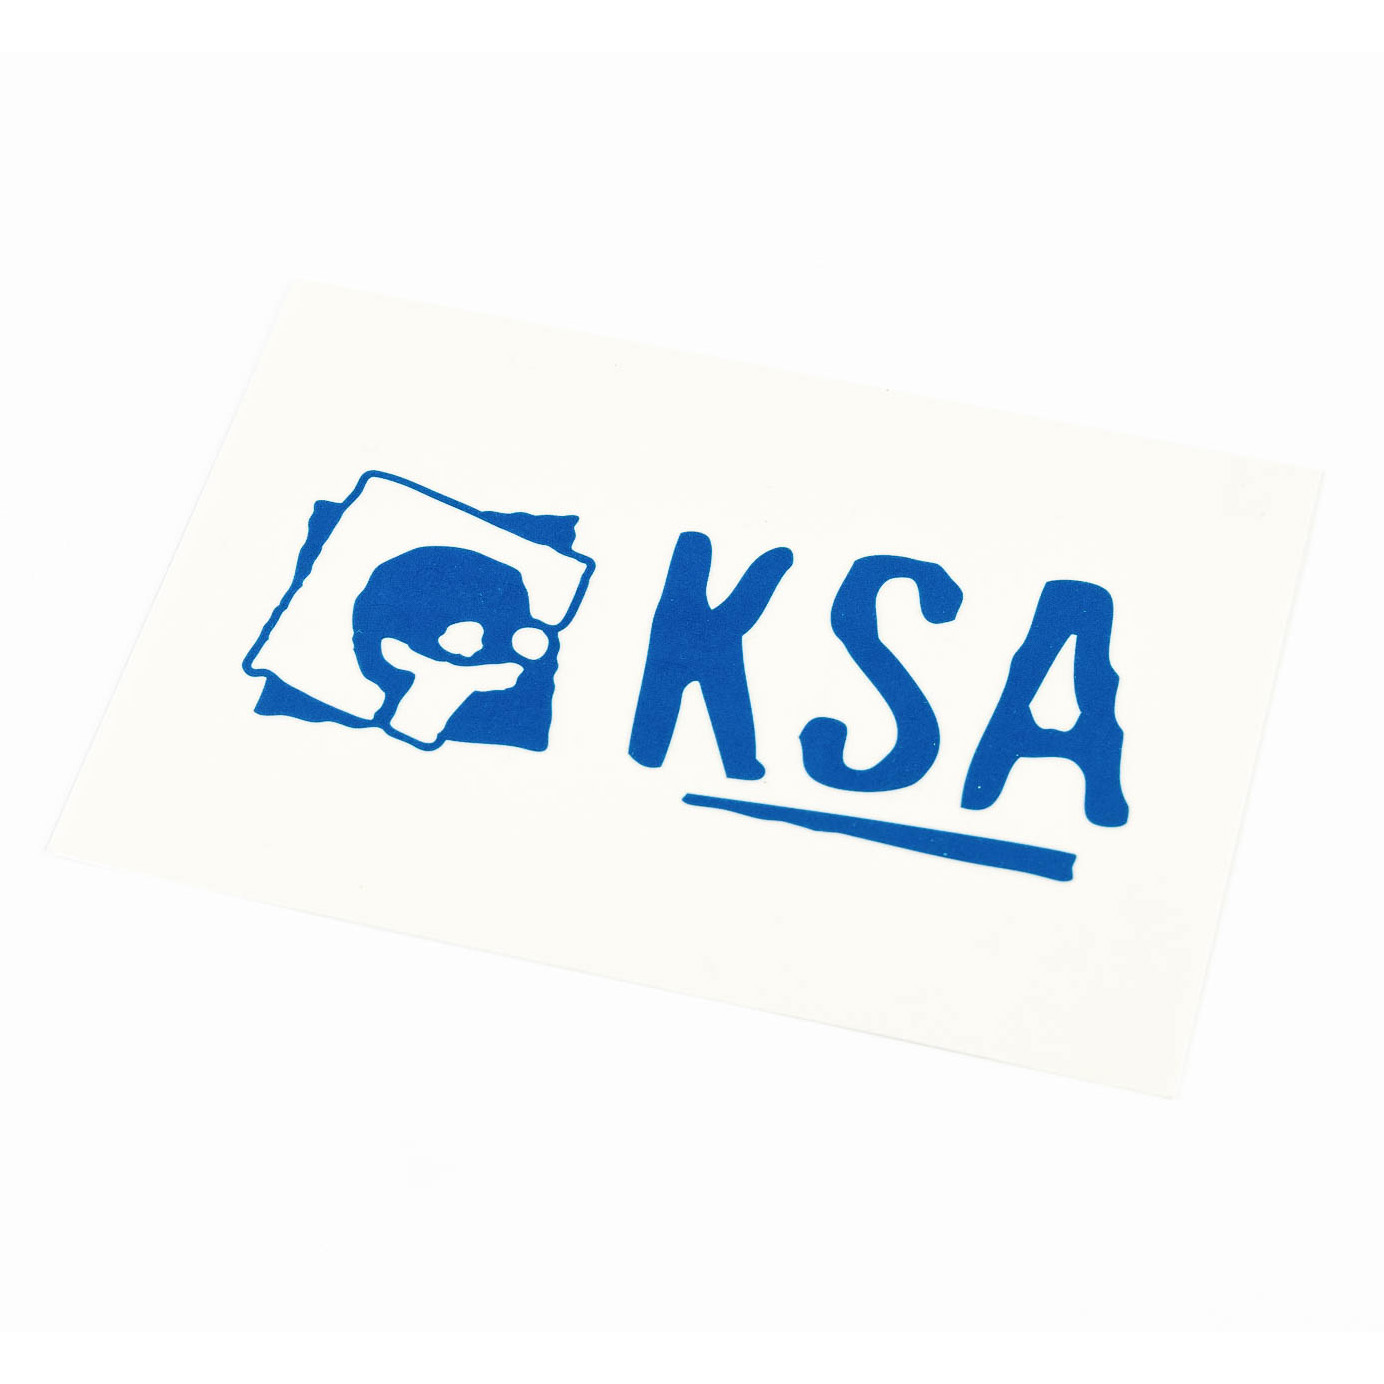 Transparante autosticker met blauw KSA-logo